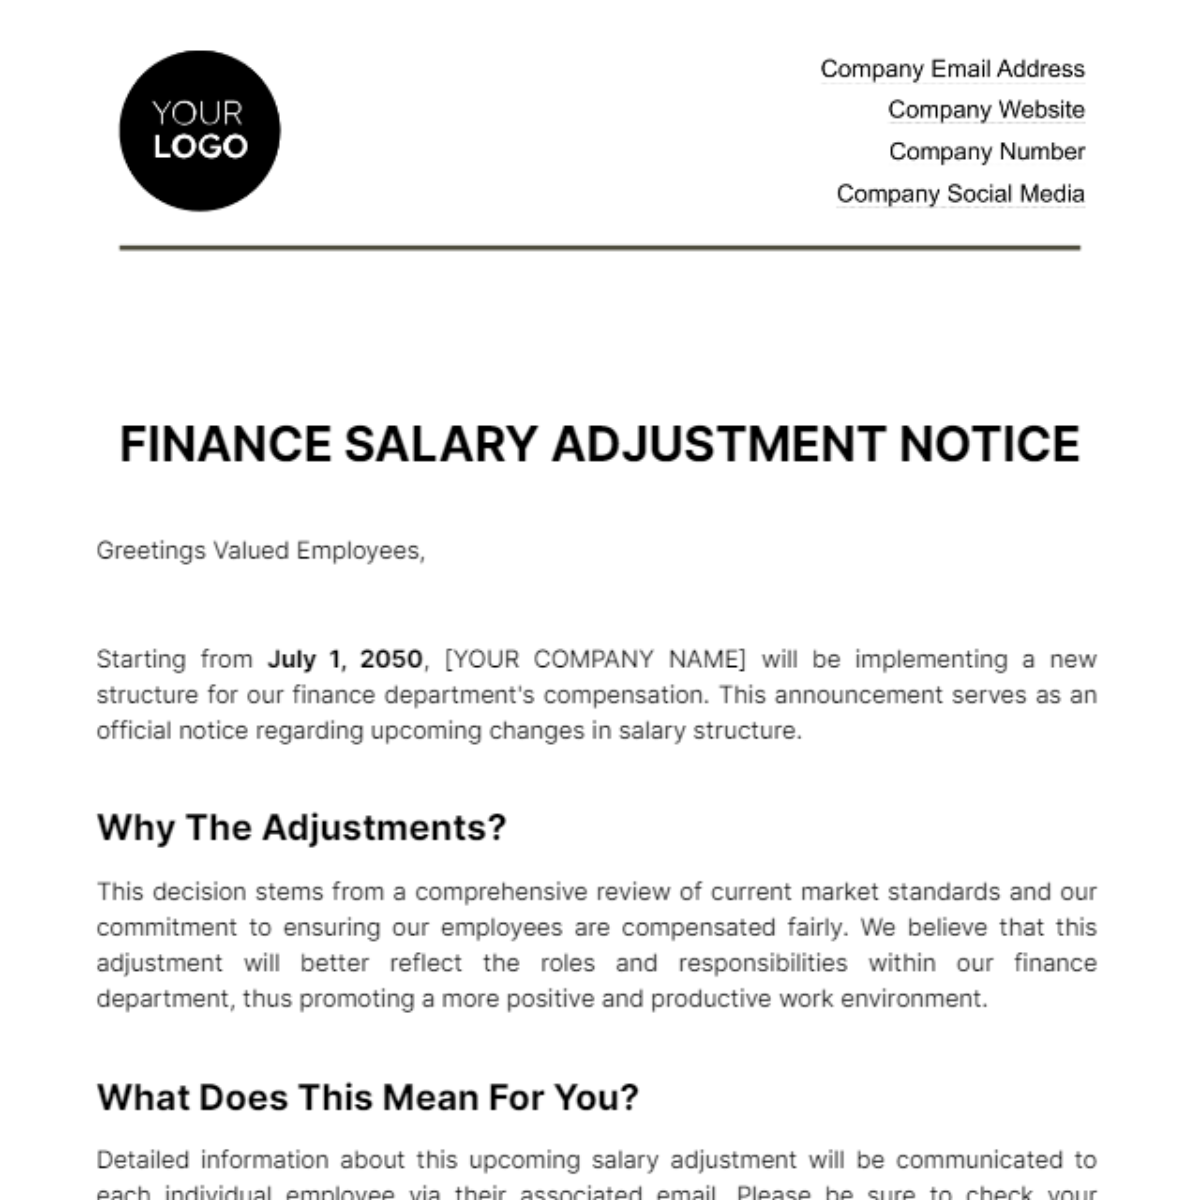 Finance Salary Adjustment Notice Template